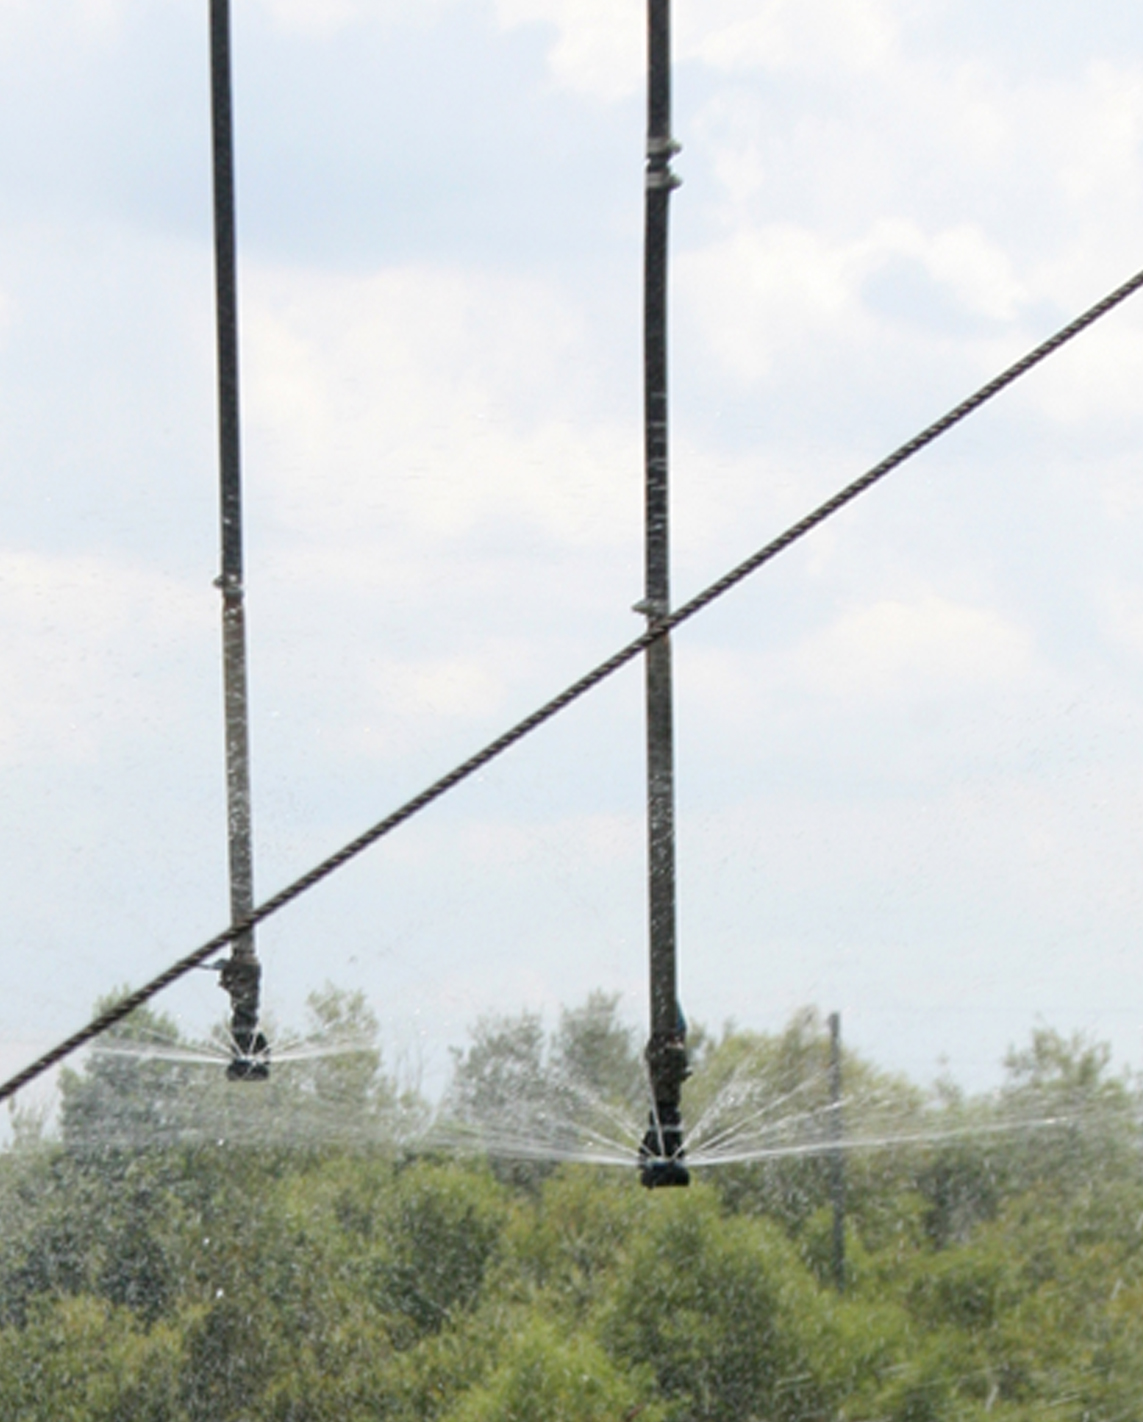 Cotton gets irrigated at UGA's Lang-Rigdon Farm in Tifton, Georgia on July 10, 2014.